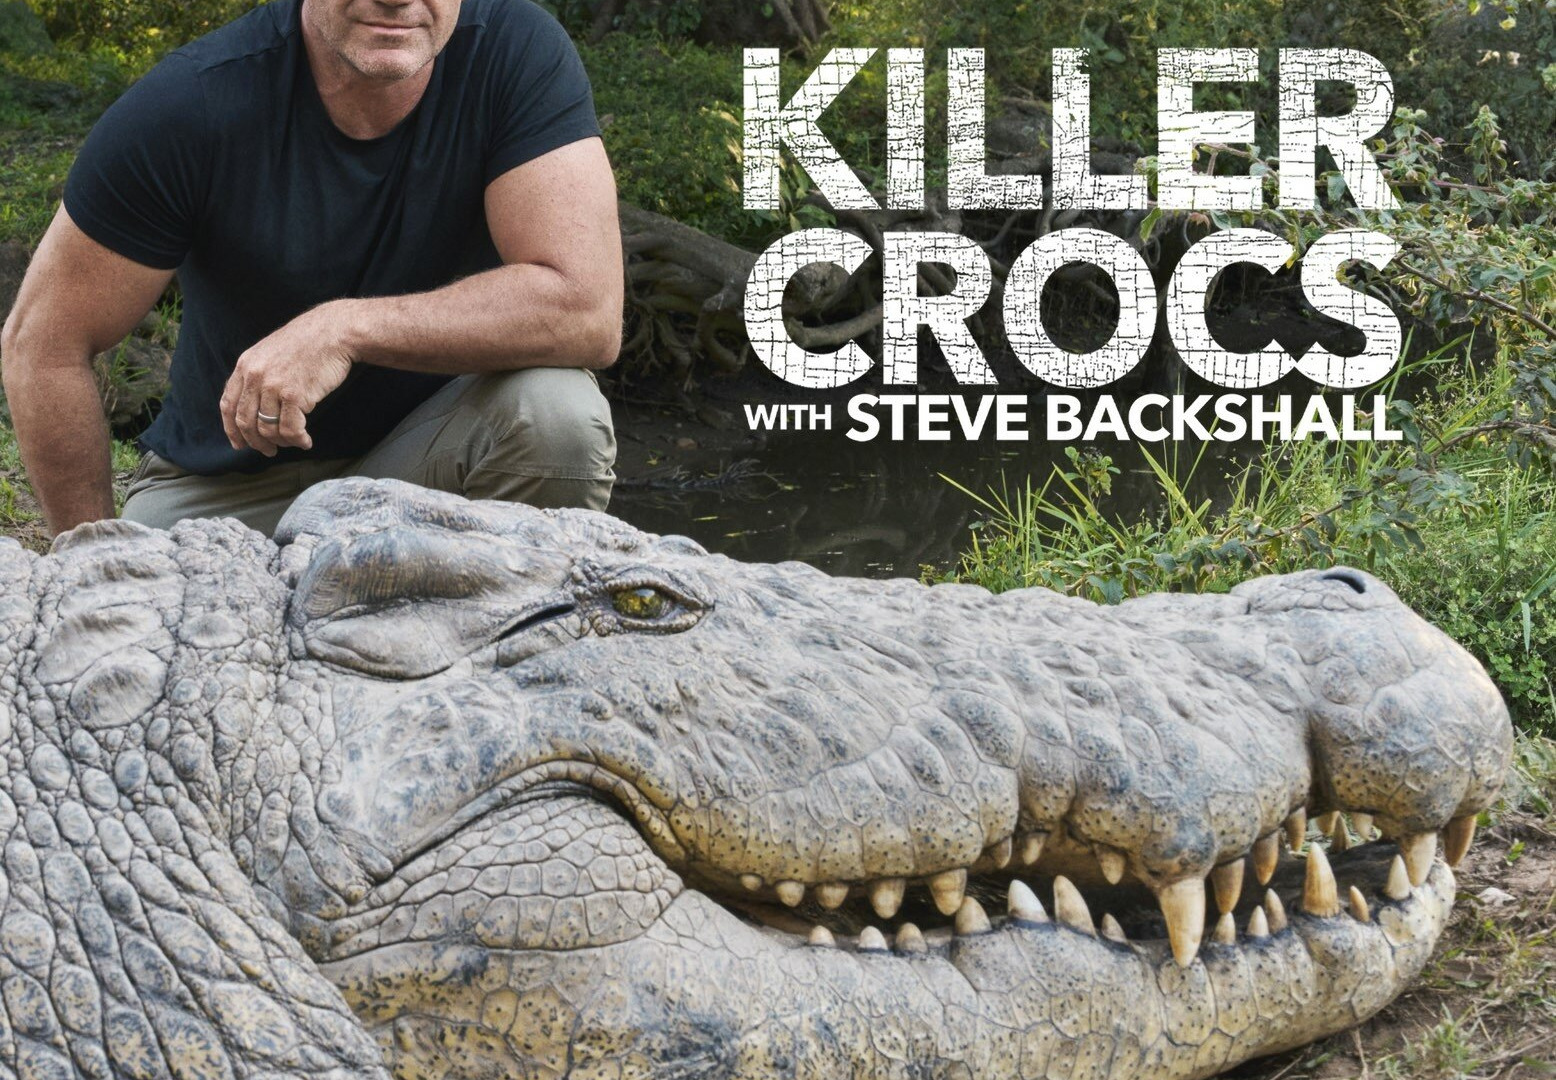 Сериал Killer Crocs with Steve Backshall